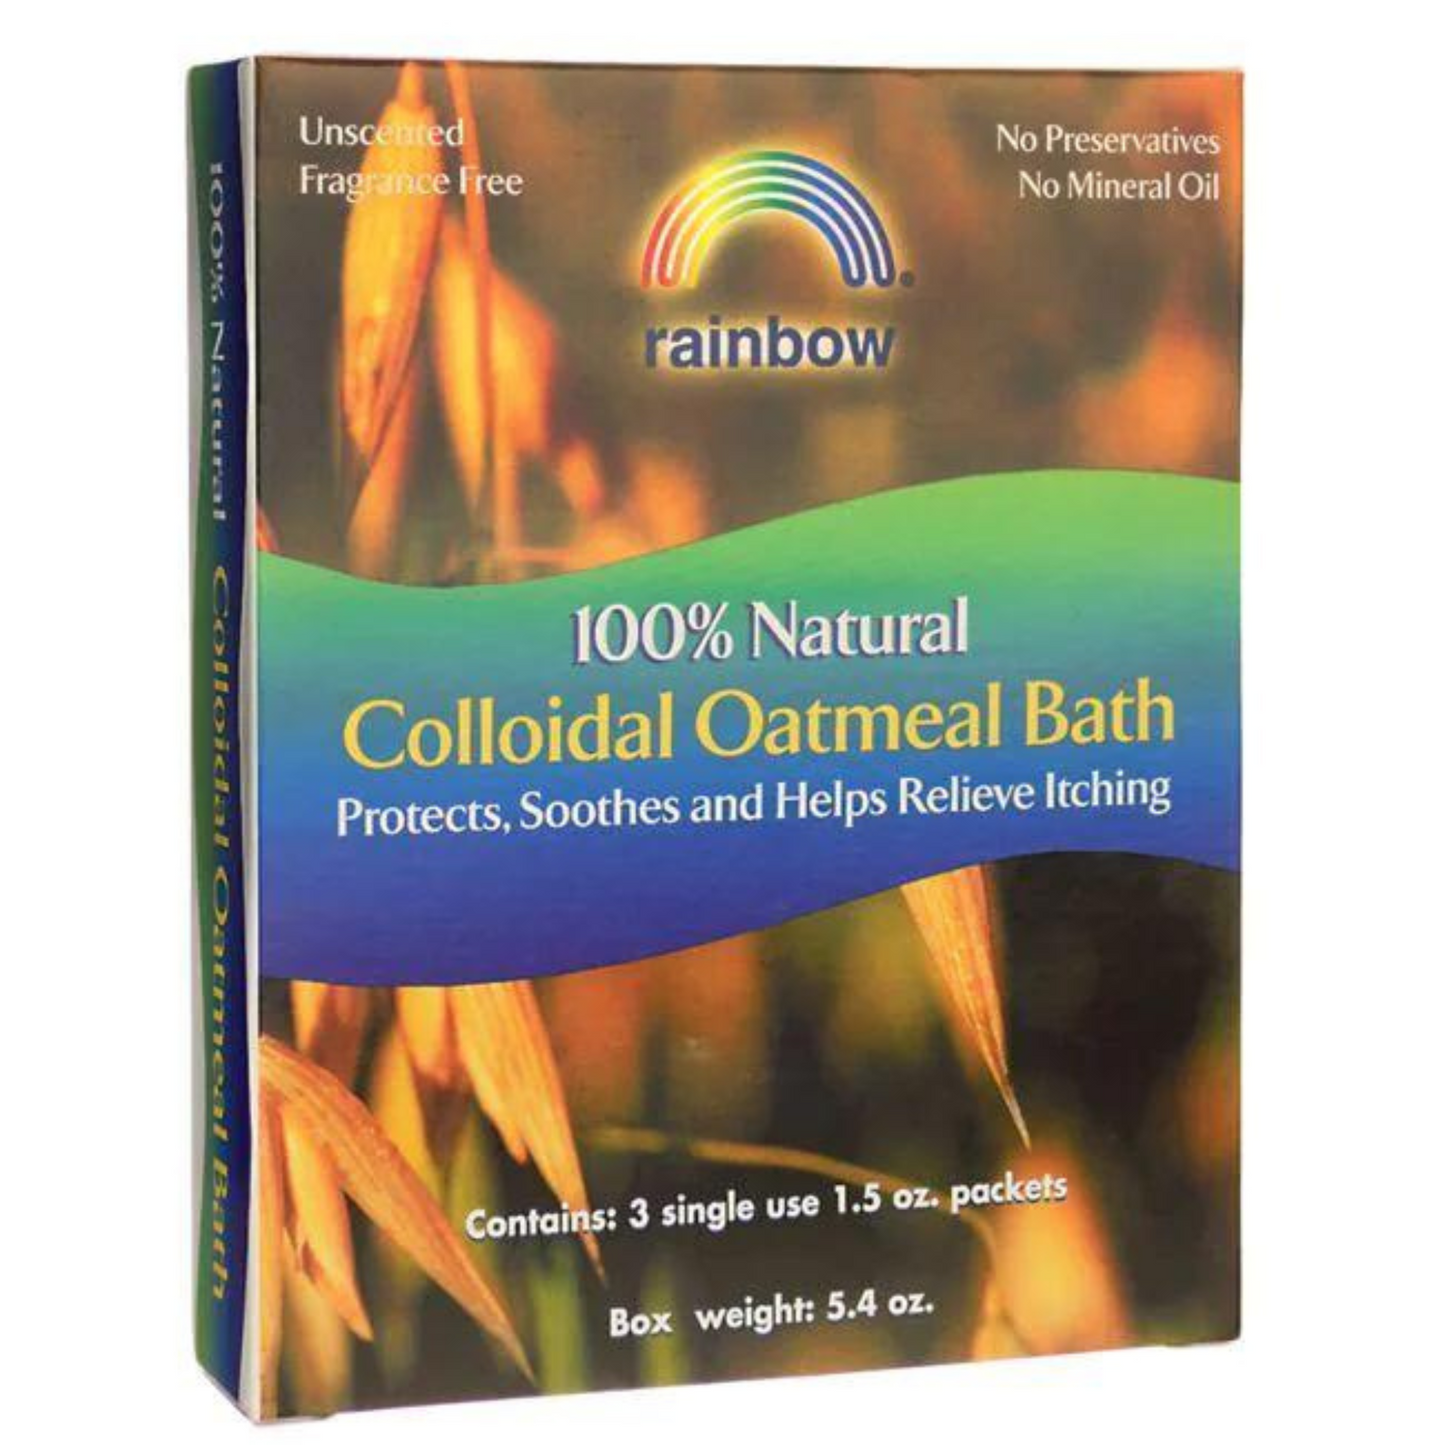 Primary Image of Rainbow Colloidal Oatmeal Bath